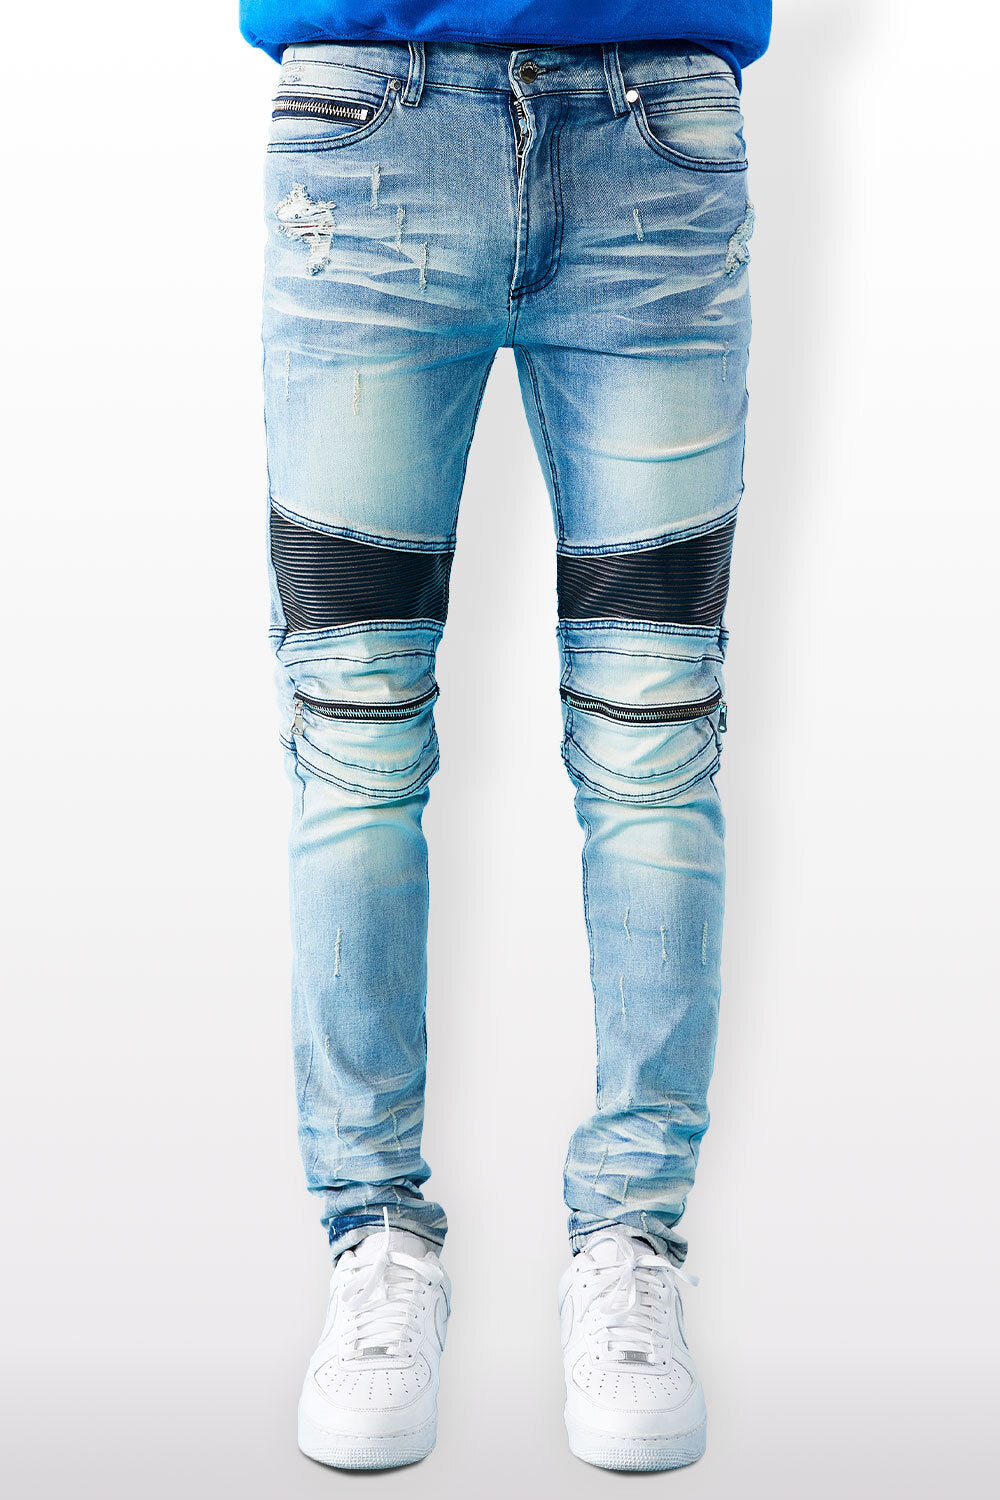 Men's Super Stacked Jeans– Rockstar Original